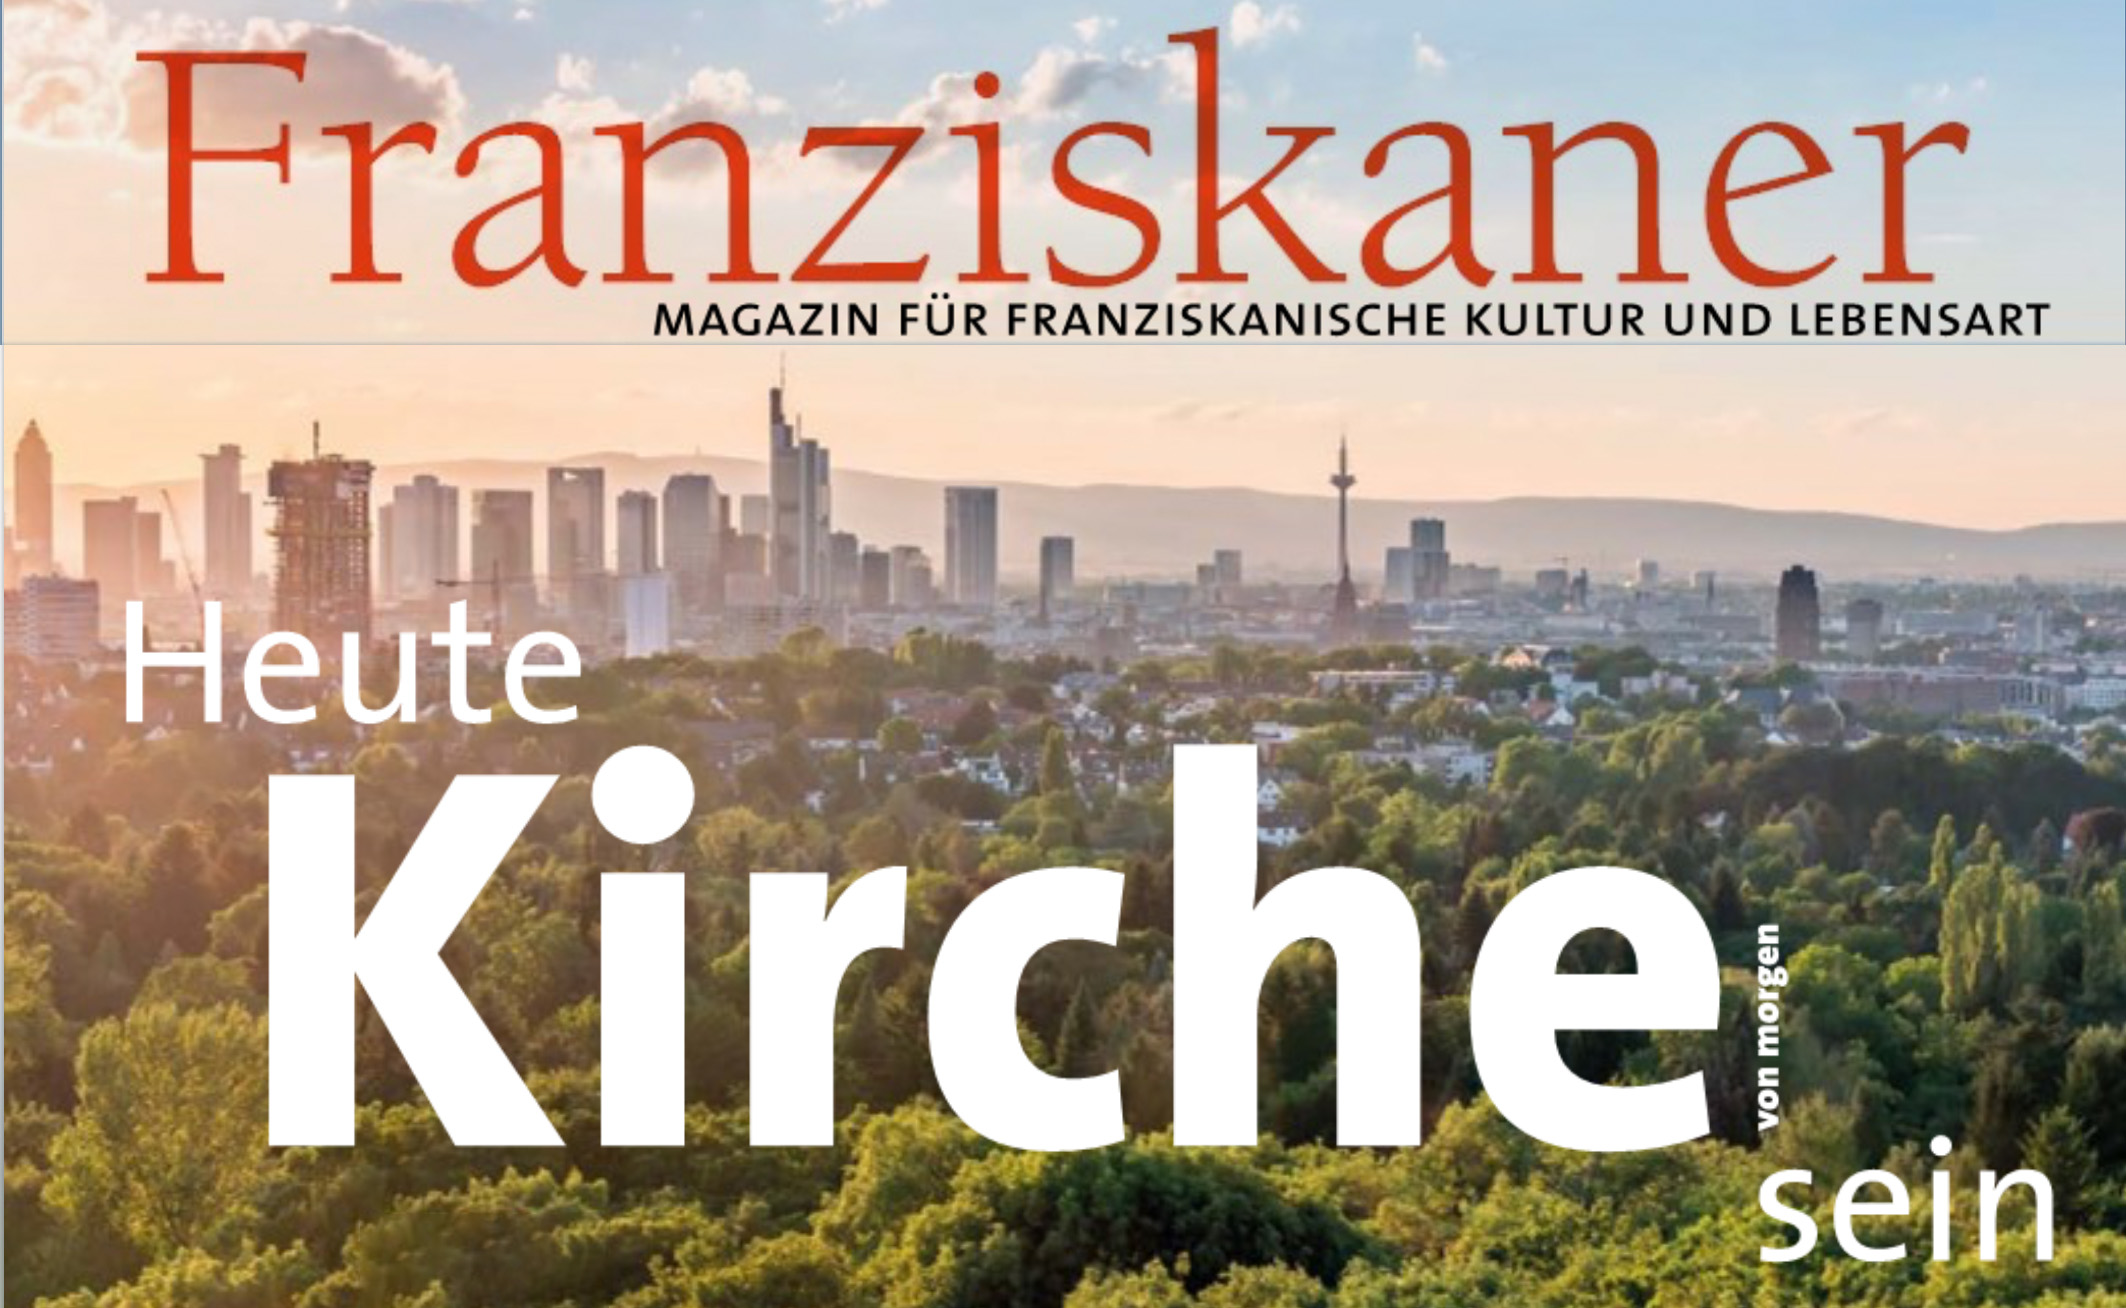 Franziskaner Magazin